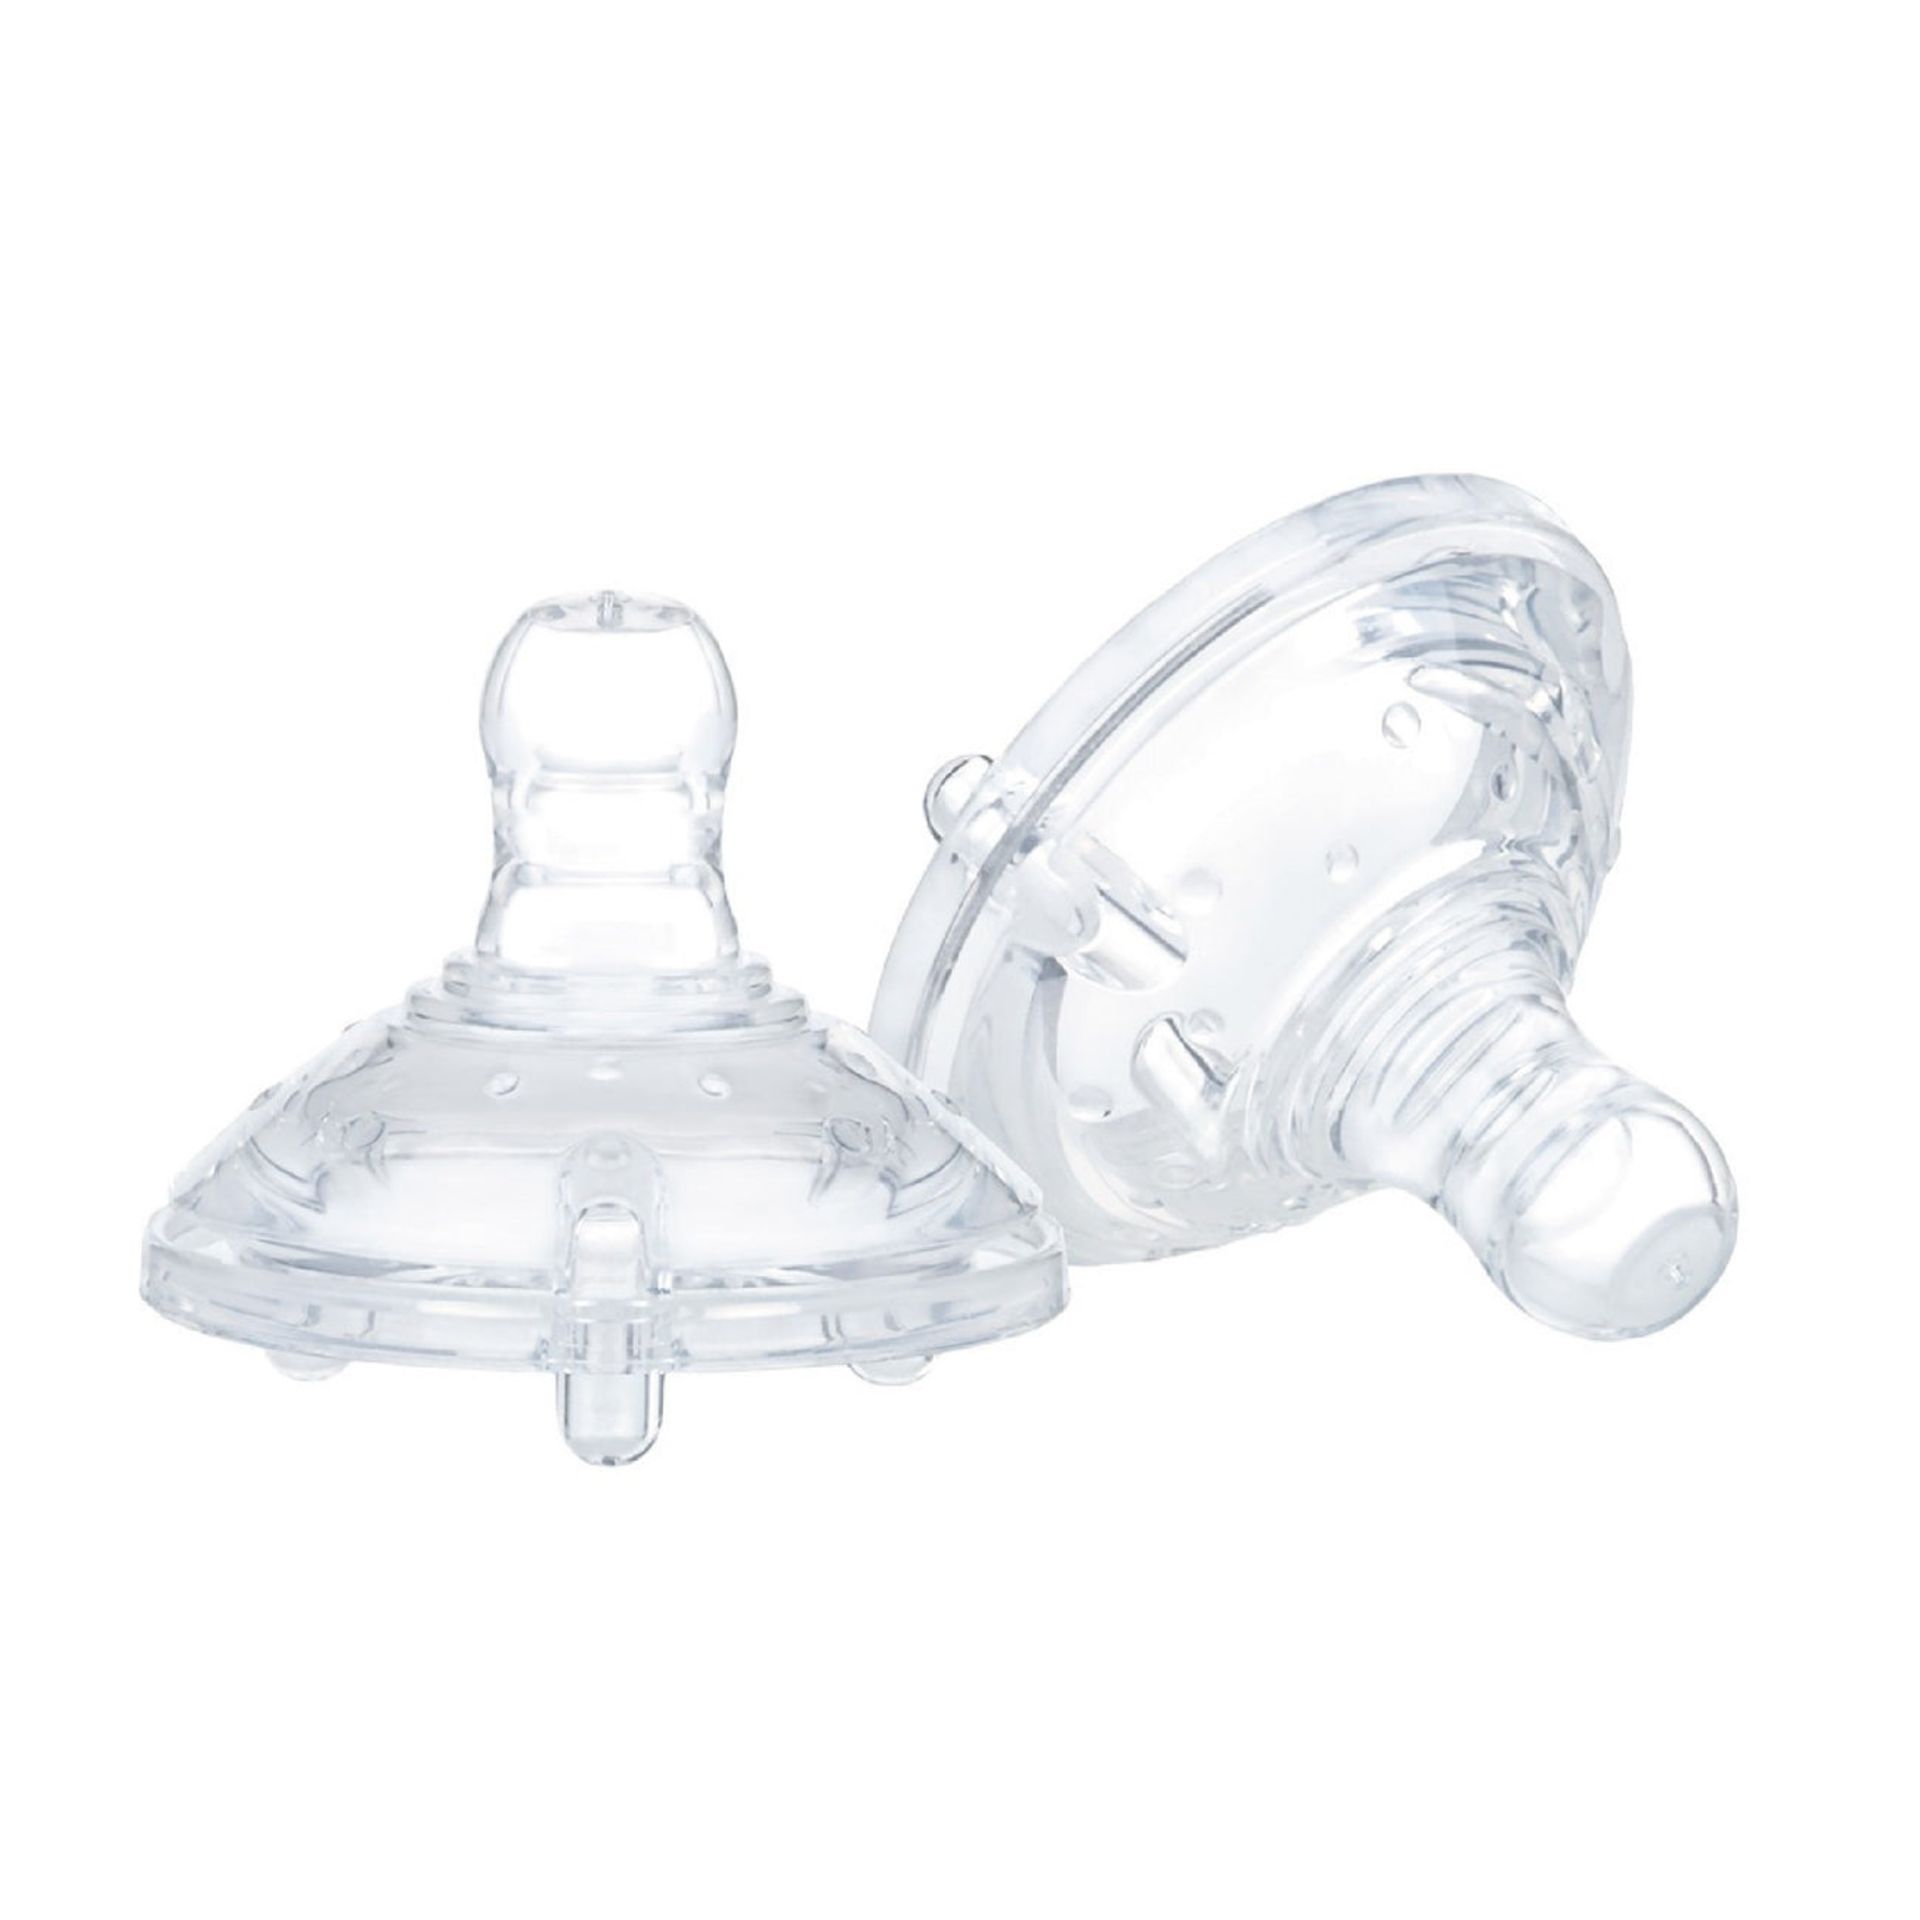 100 x Nuby Baby Bottle Teet Sets | Total RRP £700 - Image 2 of 3